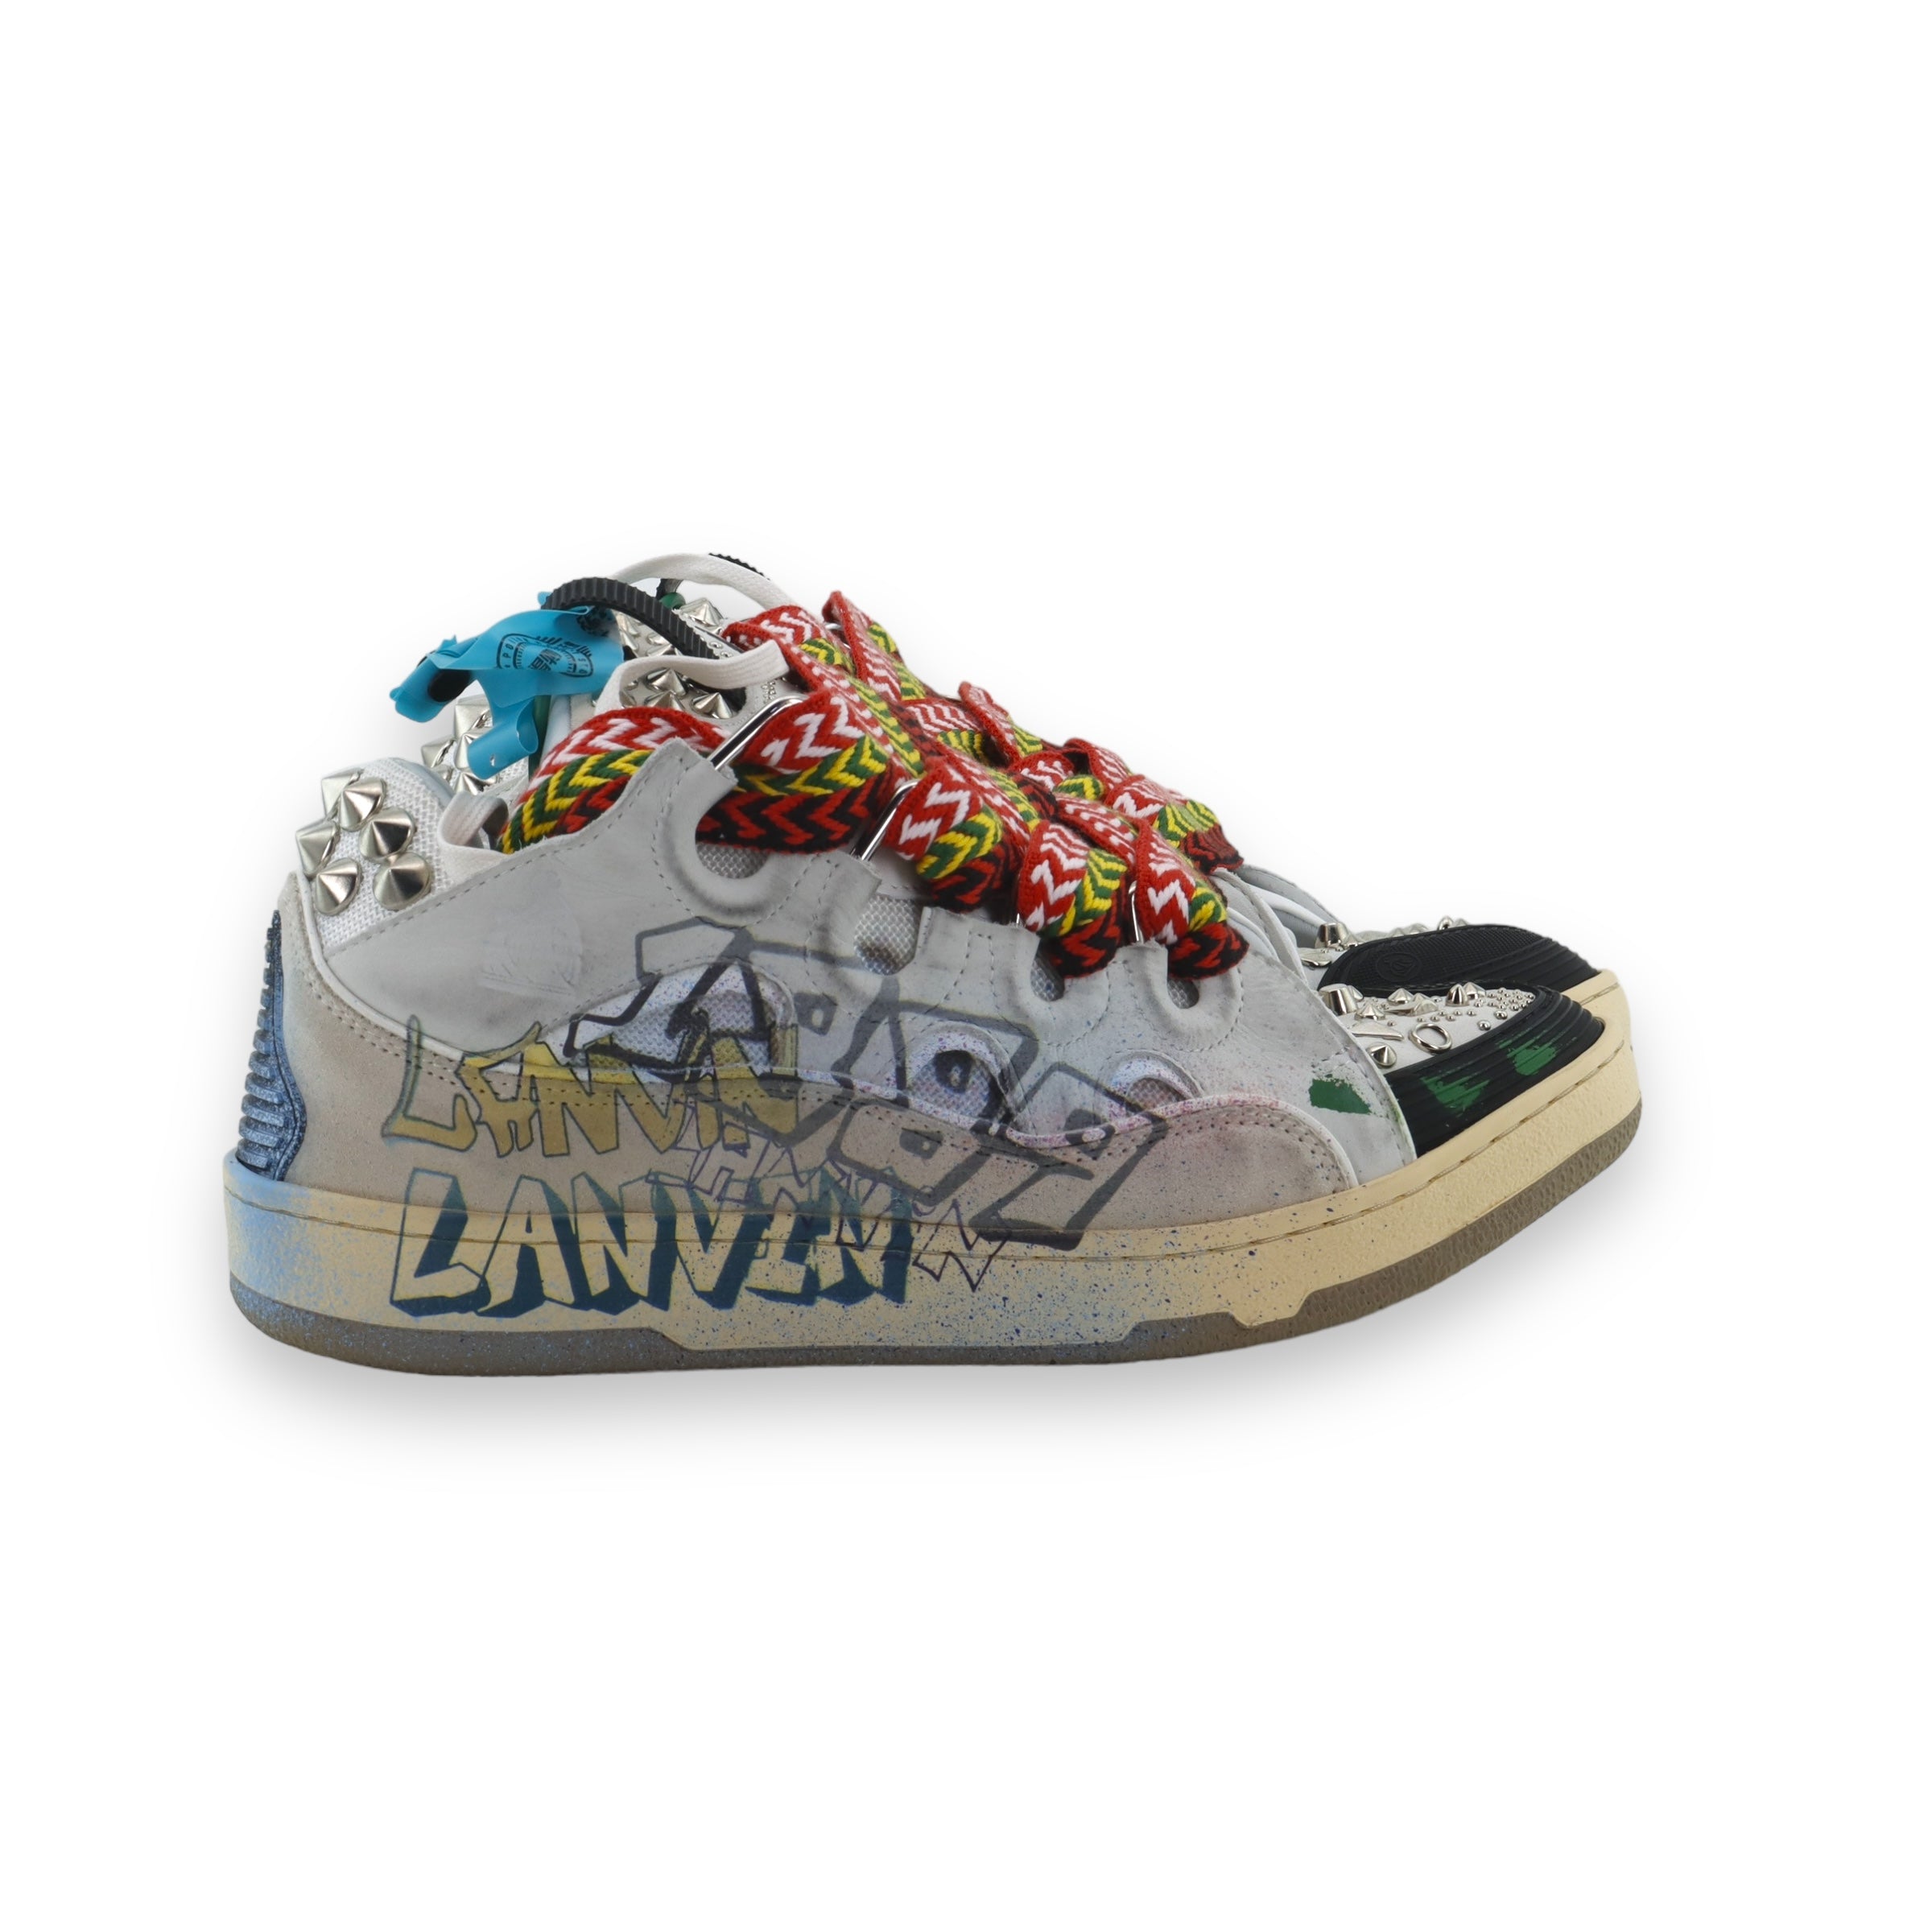 Lanvin Curb Graffiti Sneakers